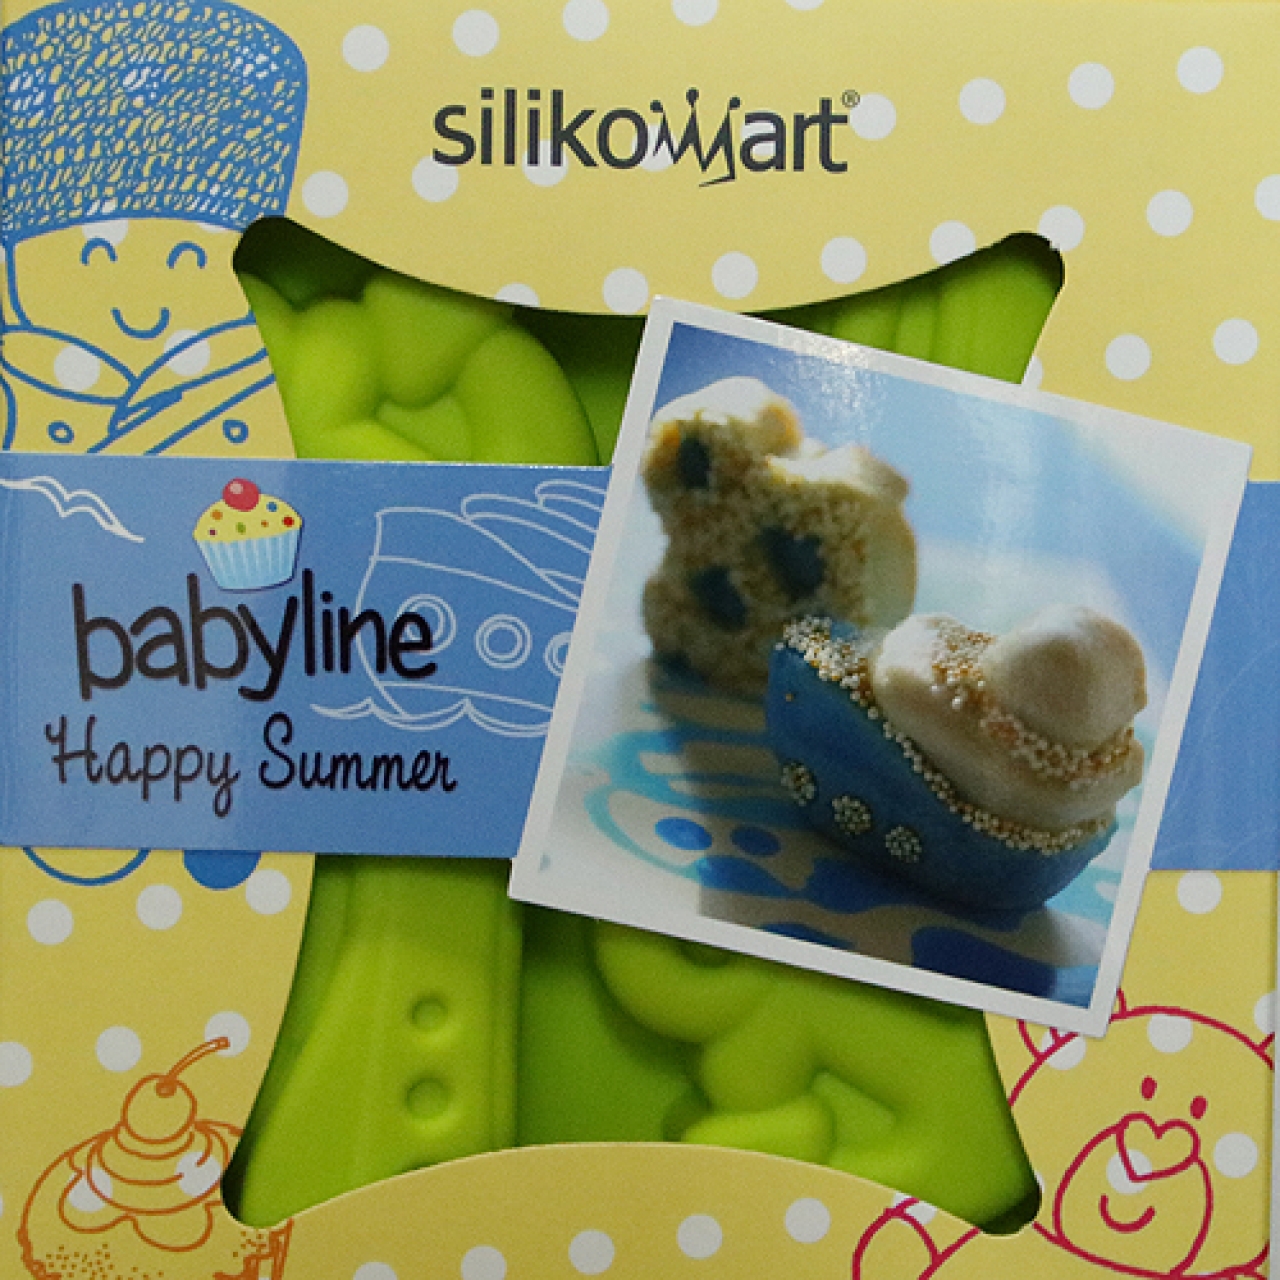 Silikomart Silikonform "Happy Summer", 4 Muffins